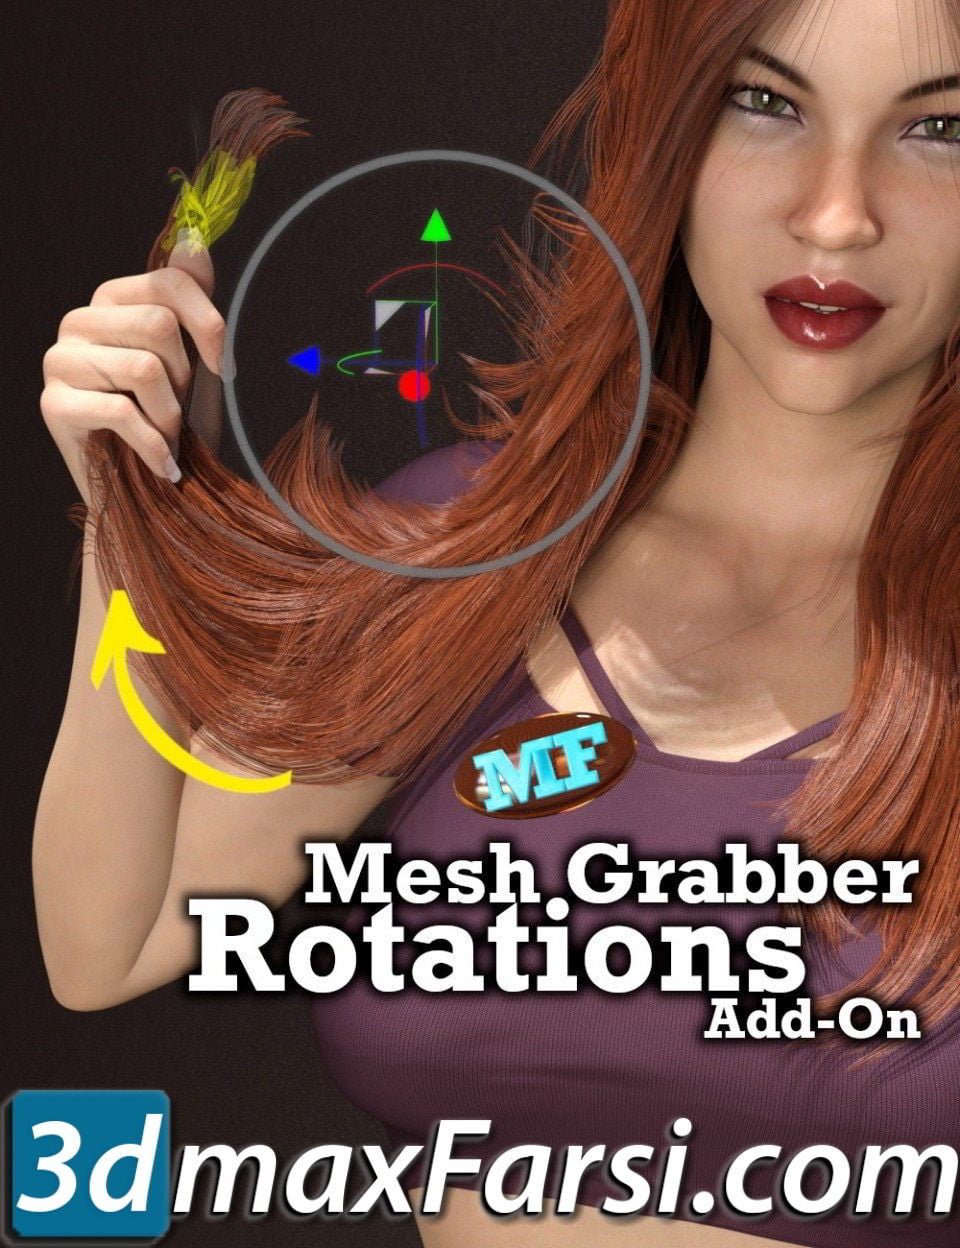 Daz3d, Mesh Grabber Rotations Add-On free download